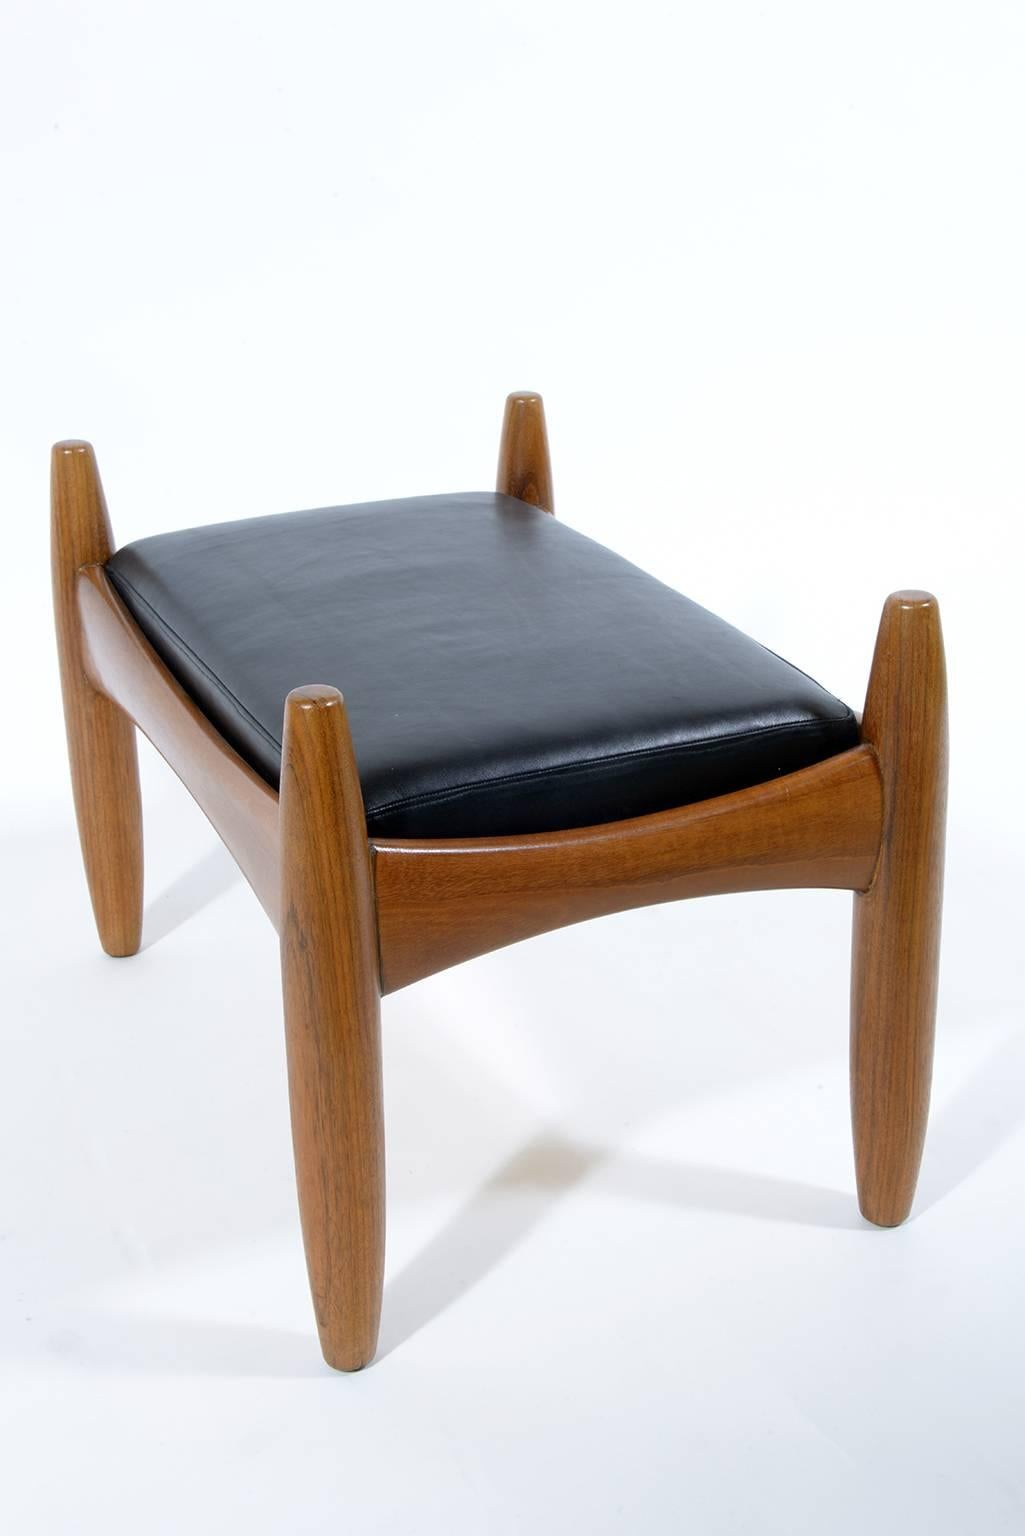 Soli sculptured teak wood and black leather upholster.